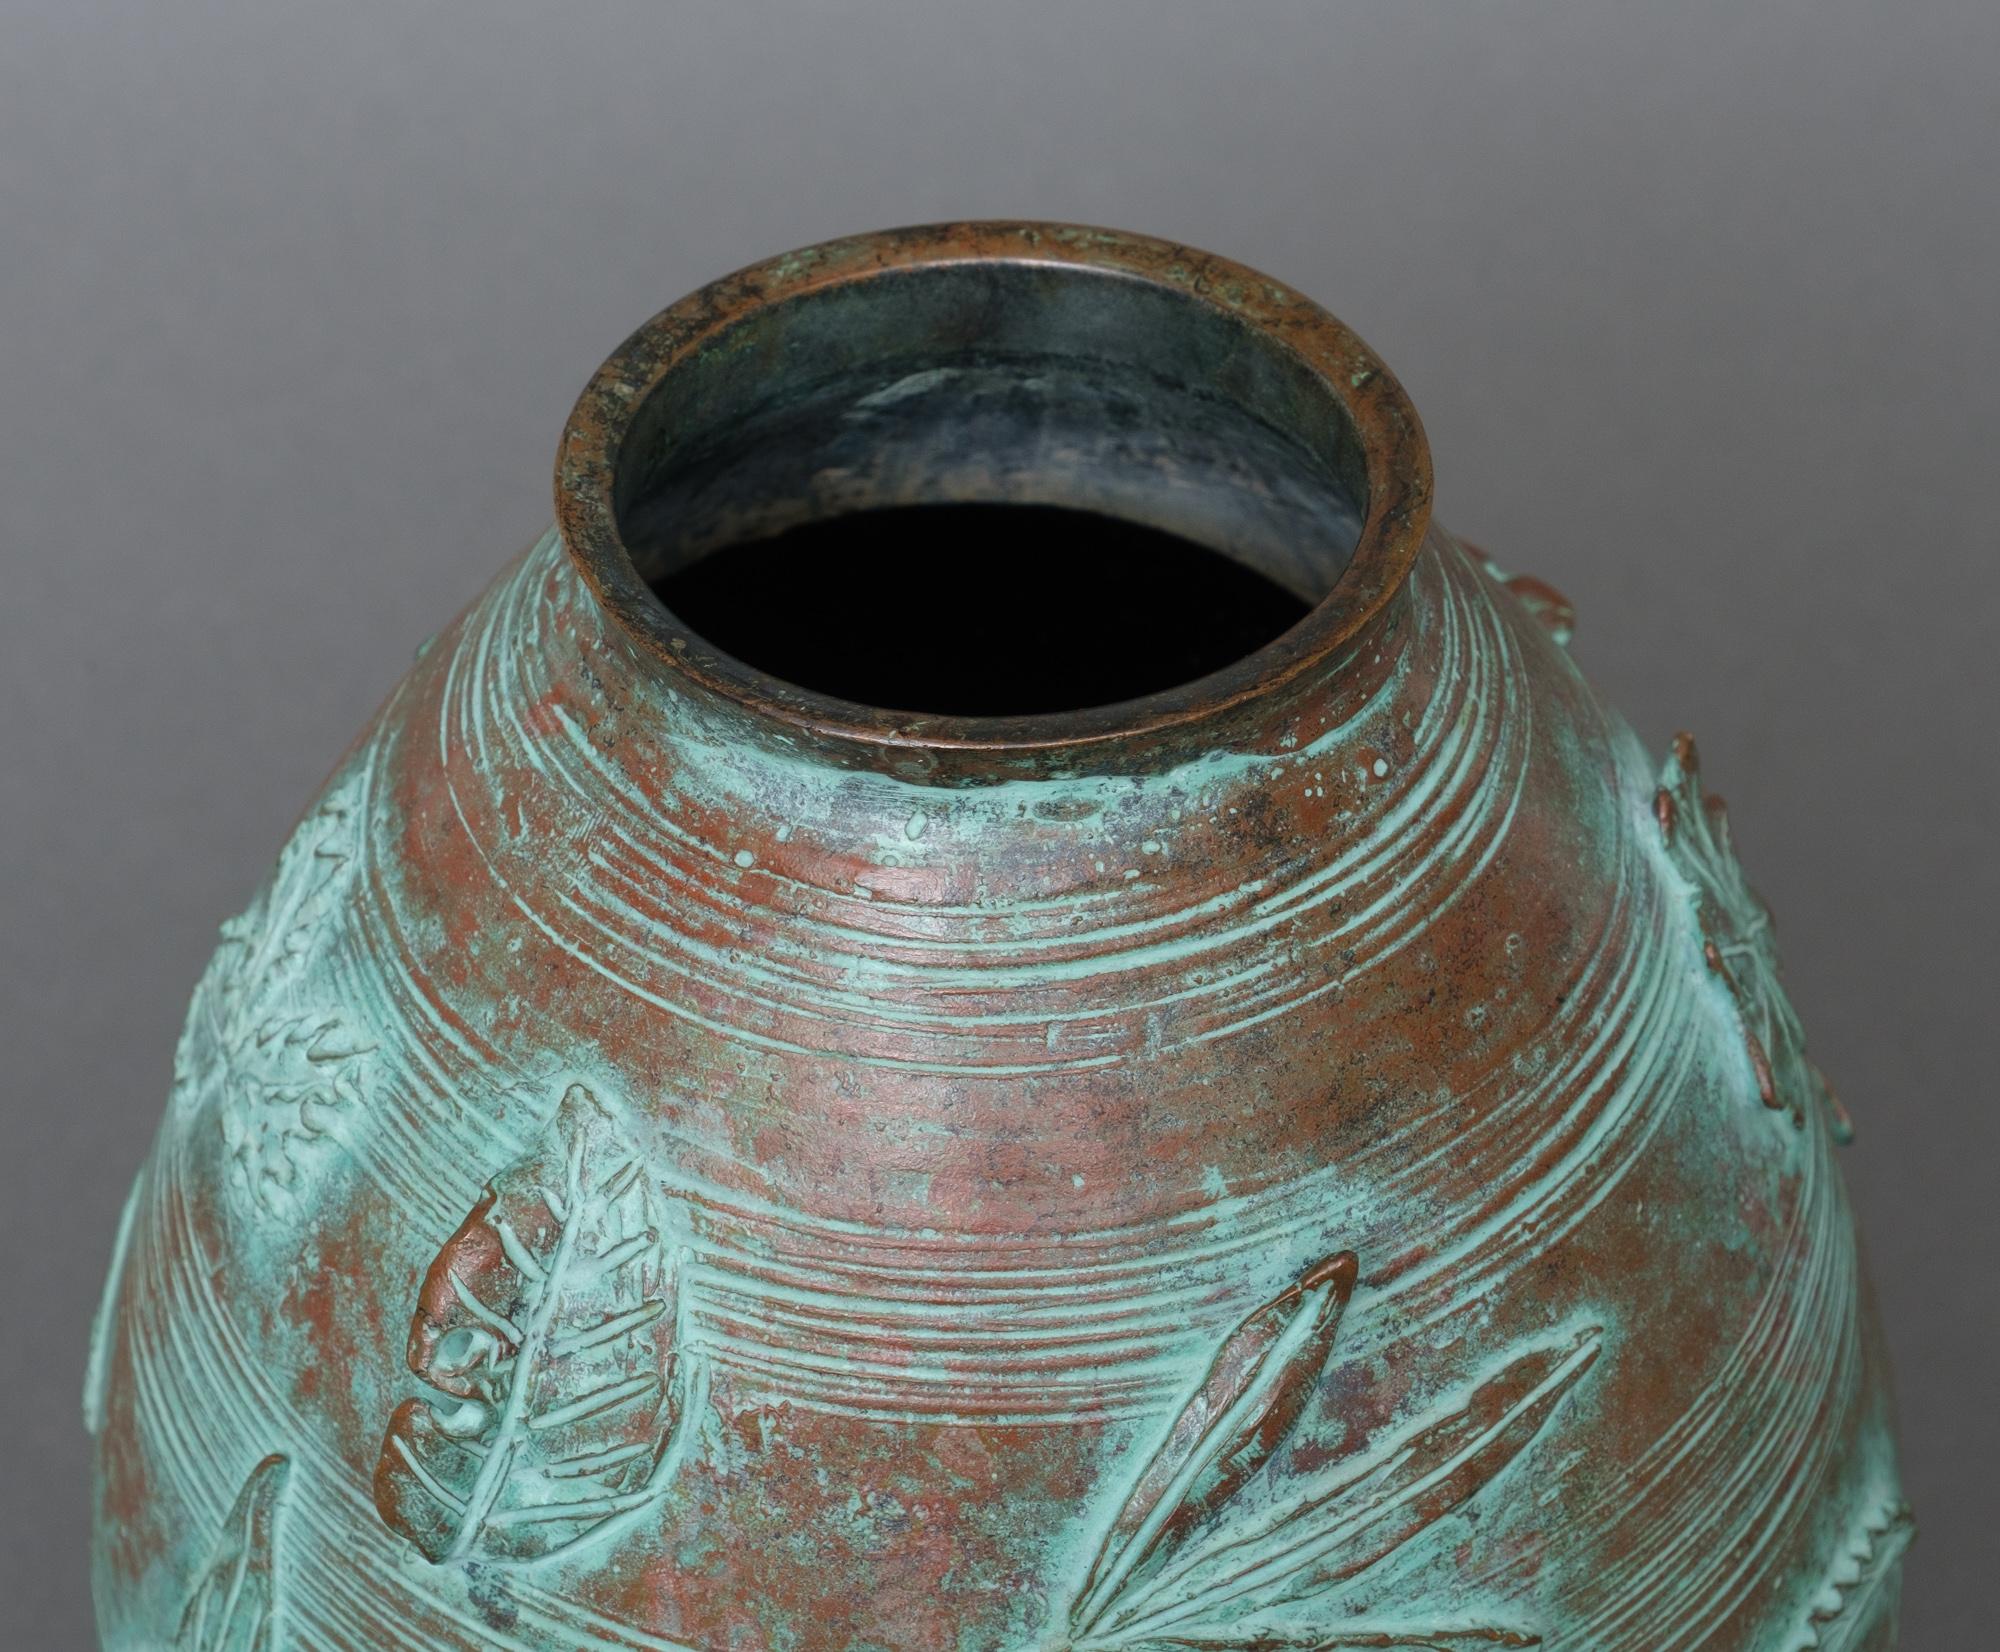 Bronze Ovoid Vase with High Relief Leaf Design by Nitten Artist Hirai Noboru 平井昇 For Sale 2